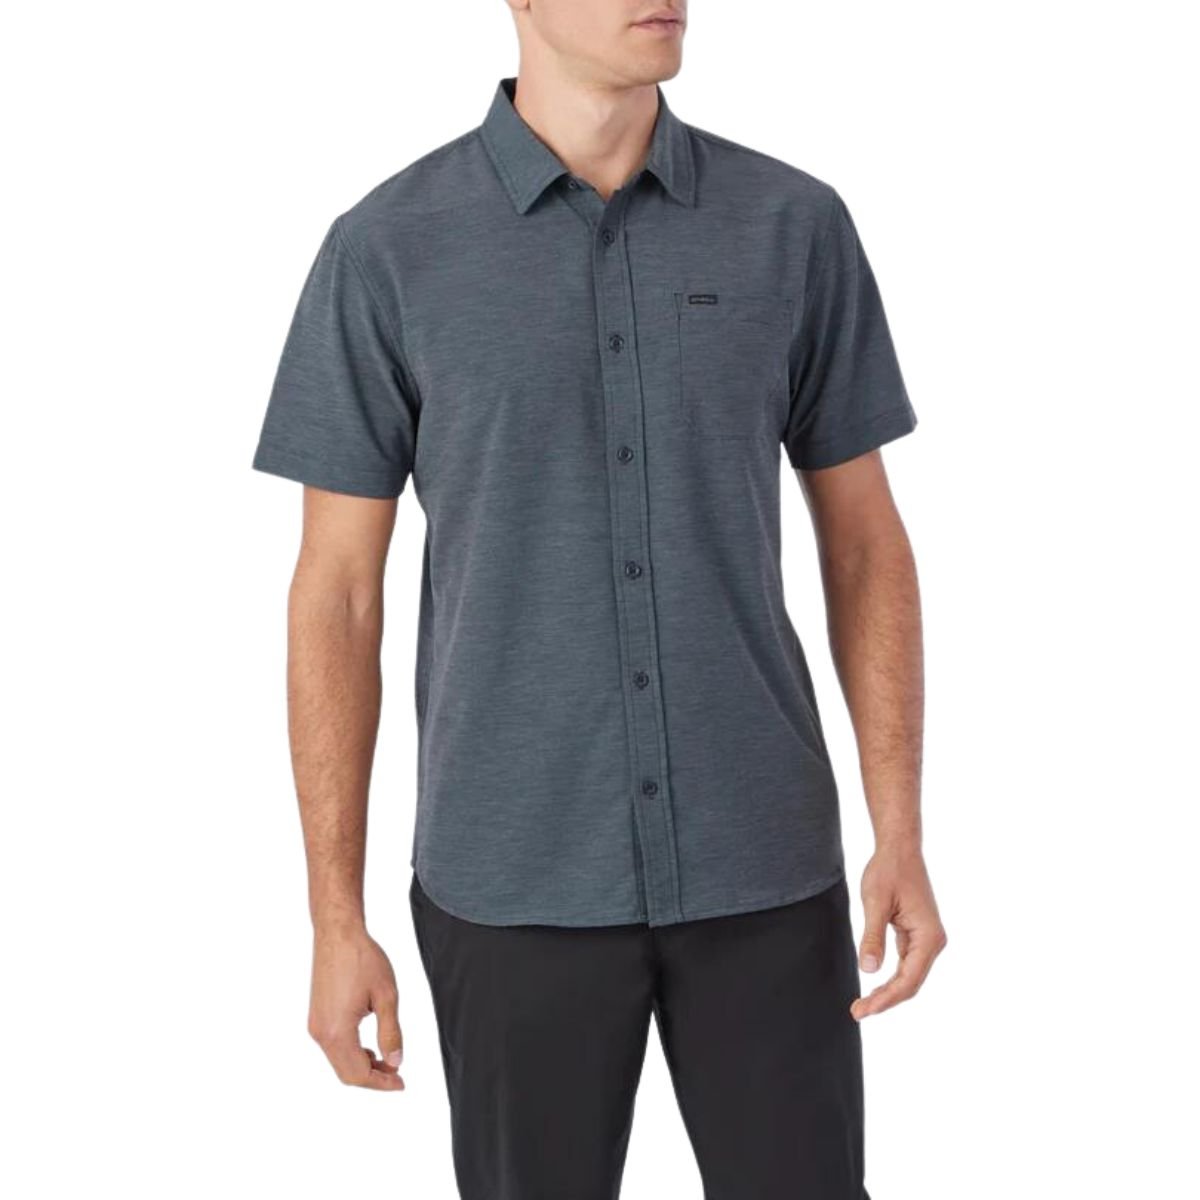 O'Neill TRVLR UPF Traverse Solid Shirt in Black - BoardCo